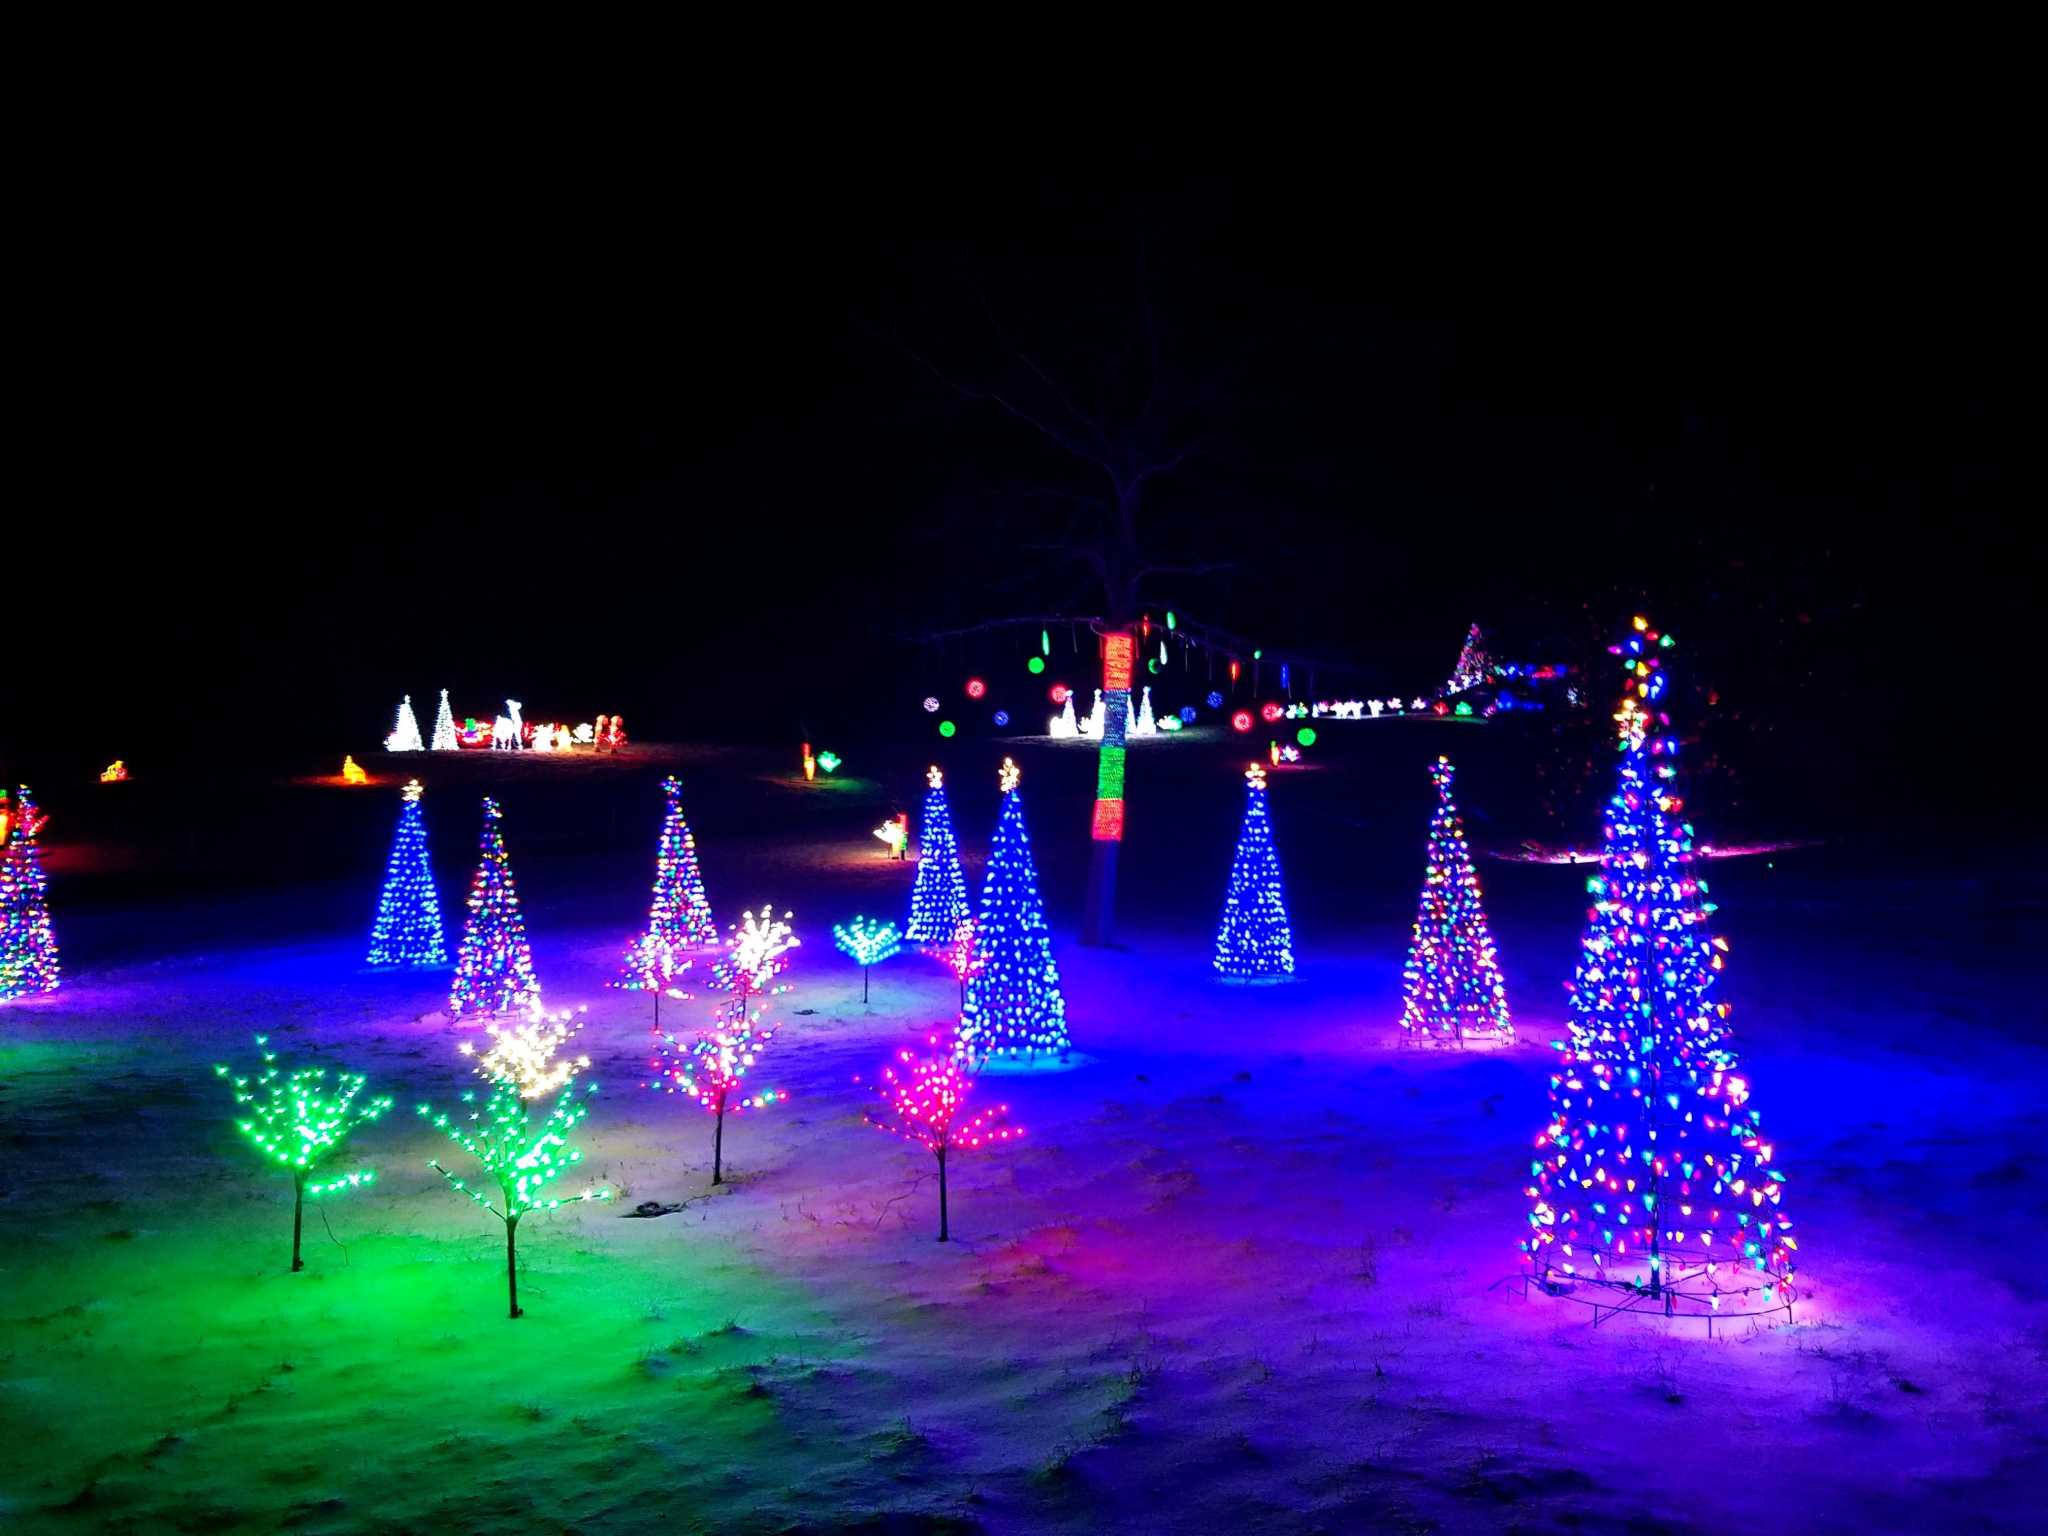 Crystal Lake Township couple brings the Christmas cheer with light display